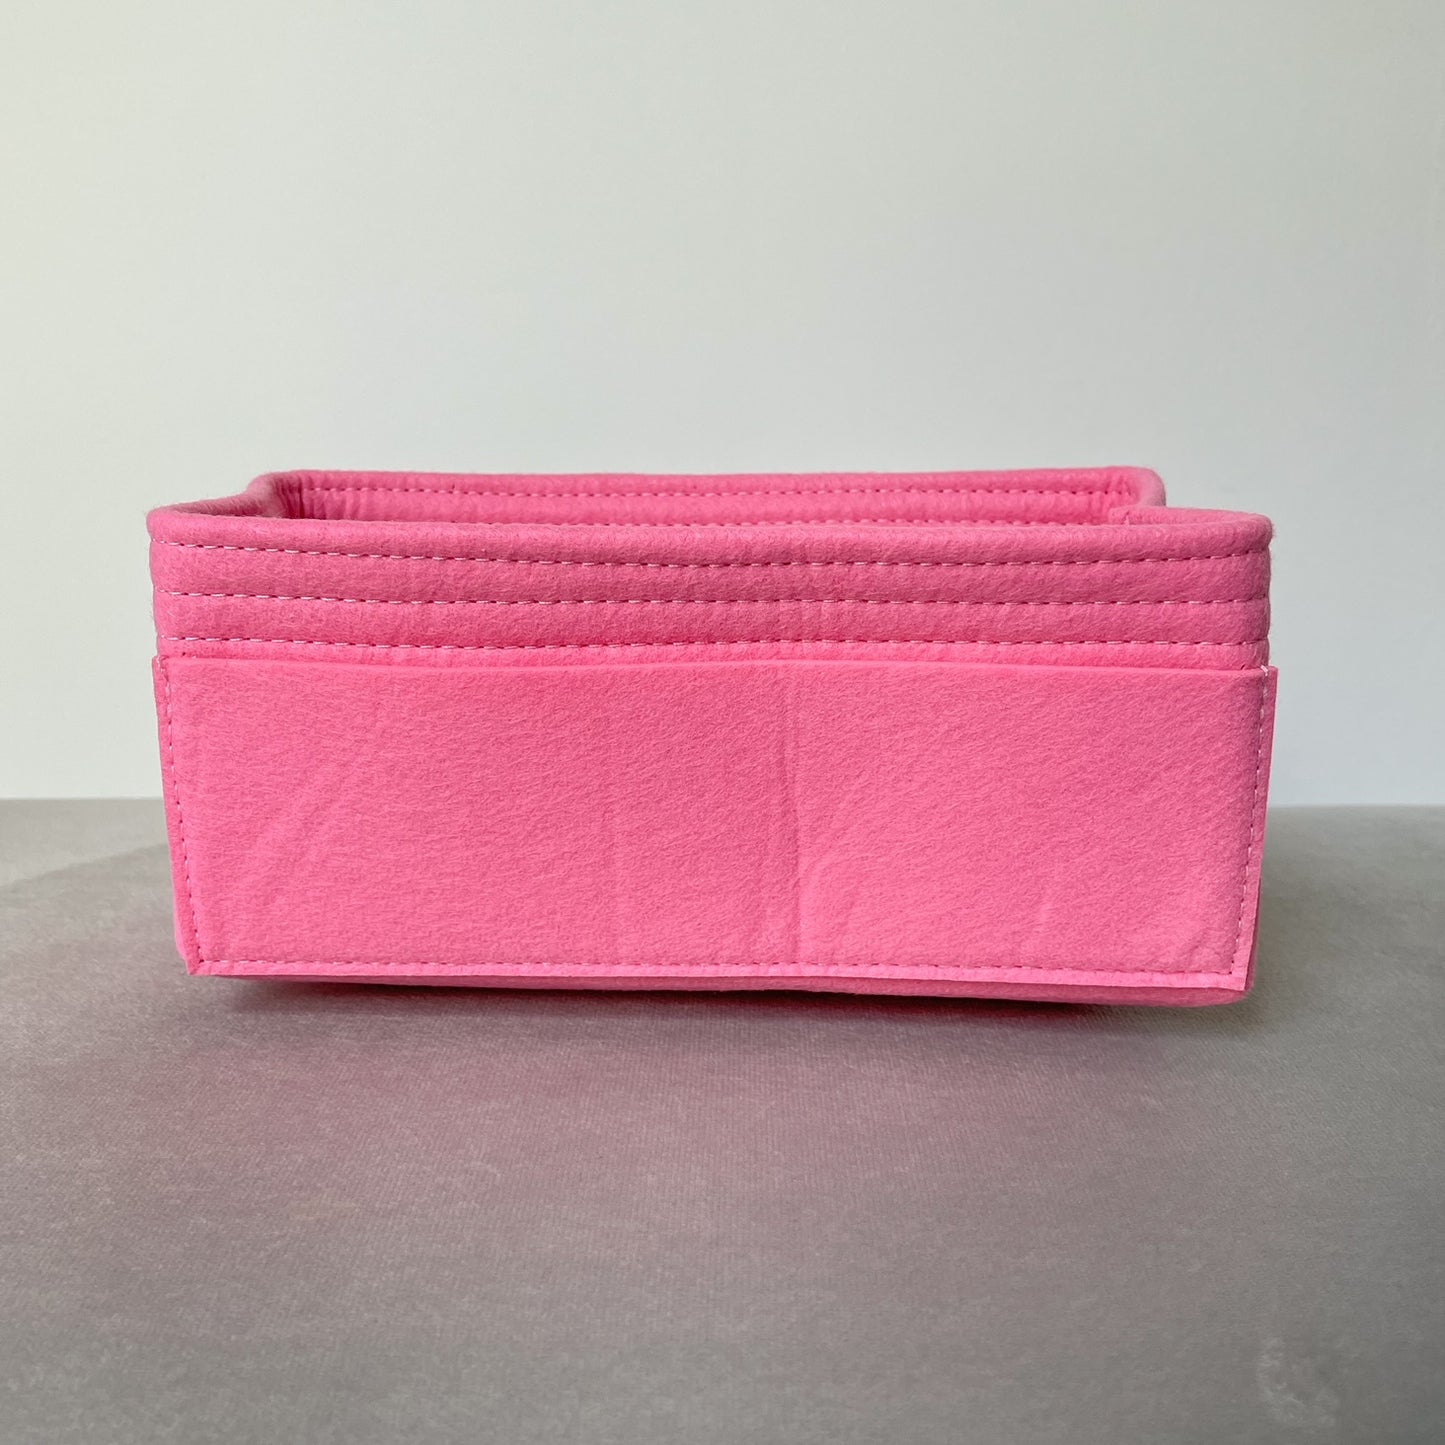 Birkin Bag Caddy in Pink